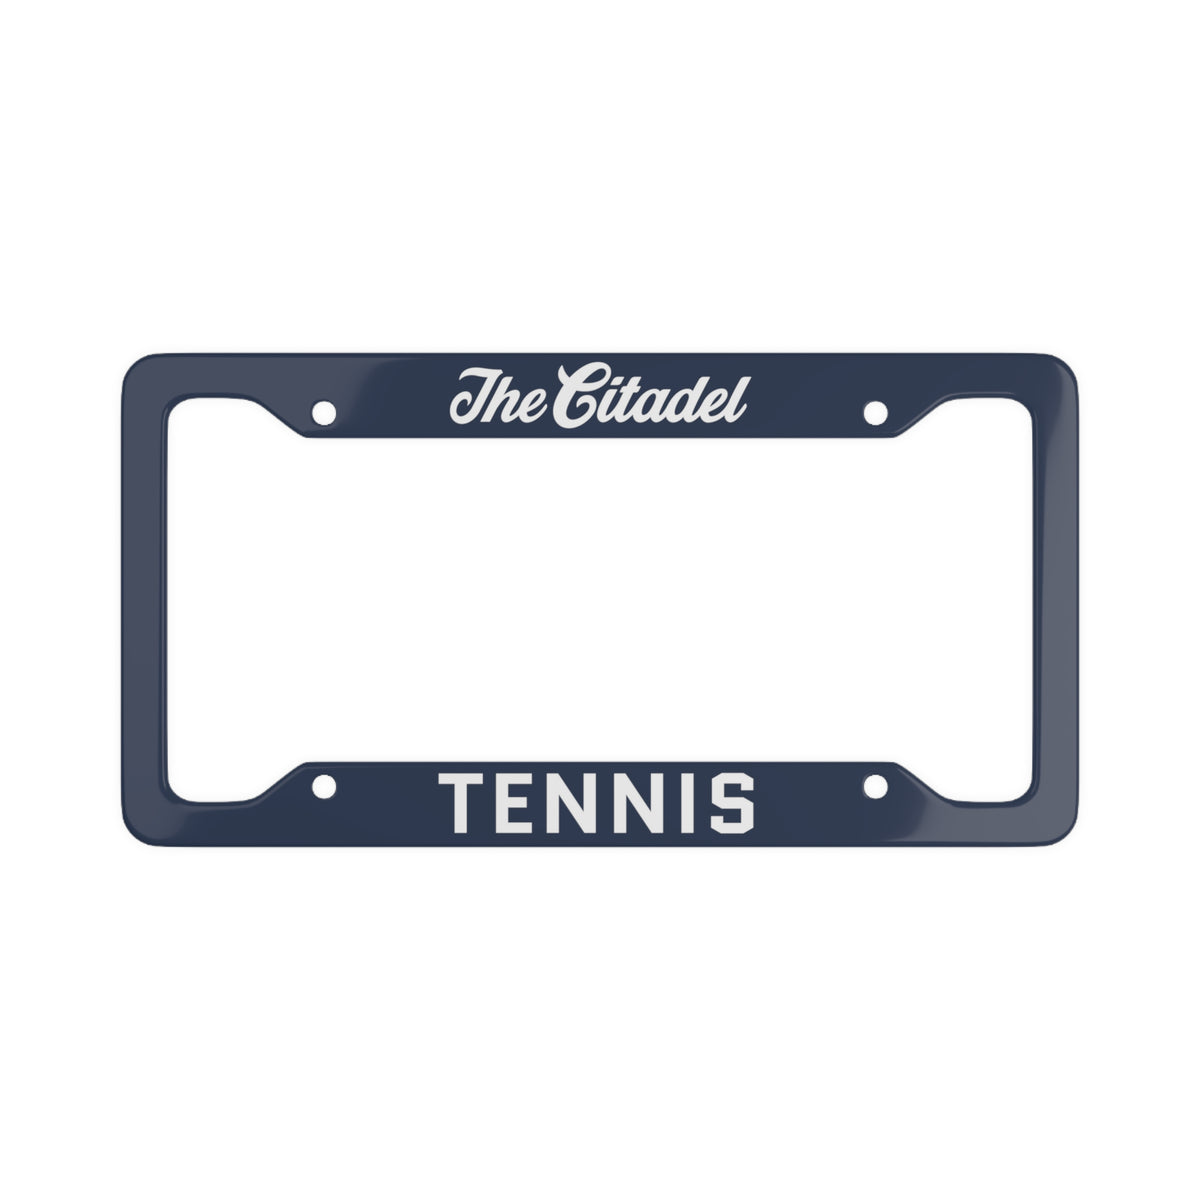 The Citadel, Tennis License Plate Frame